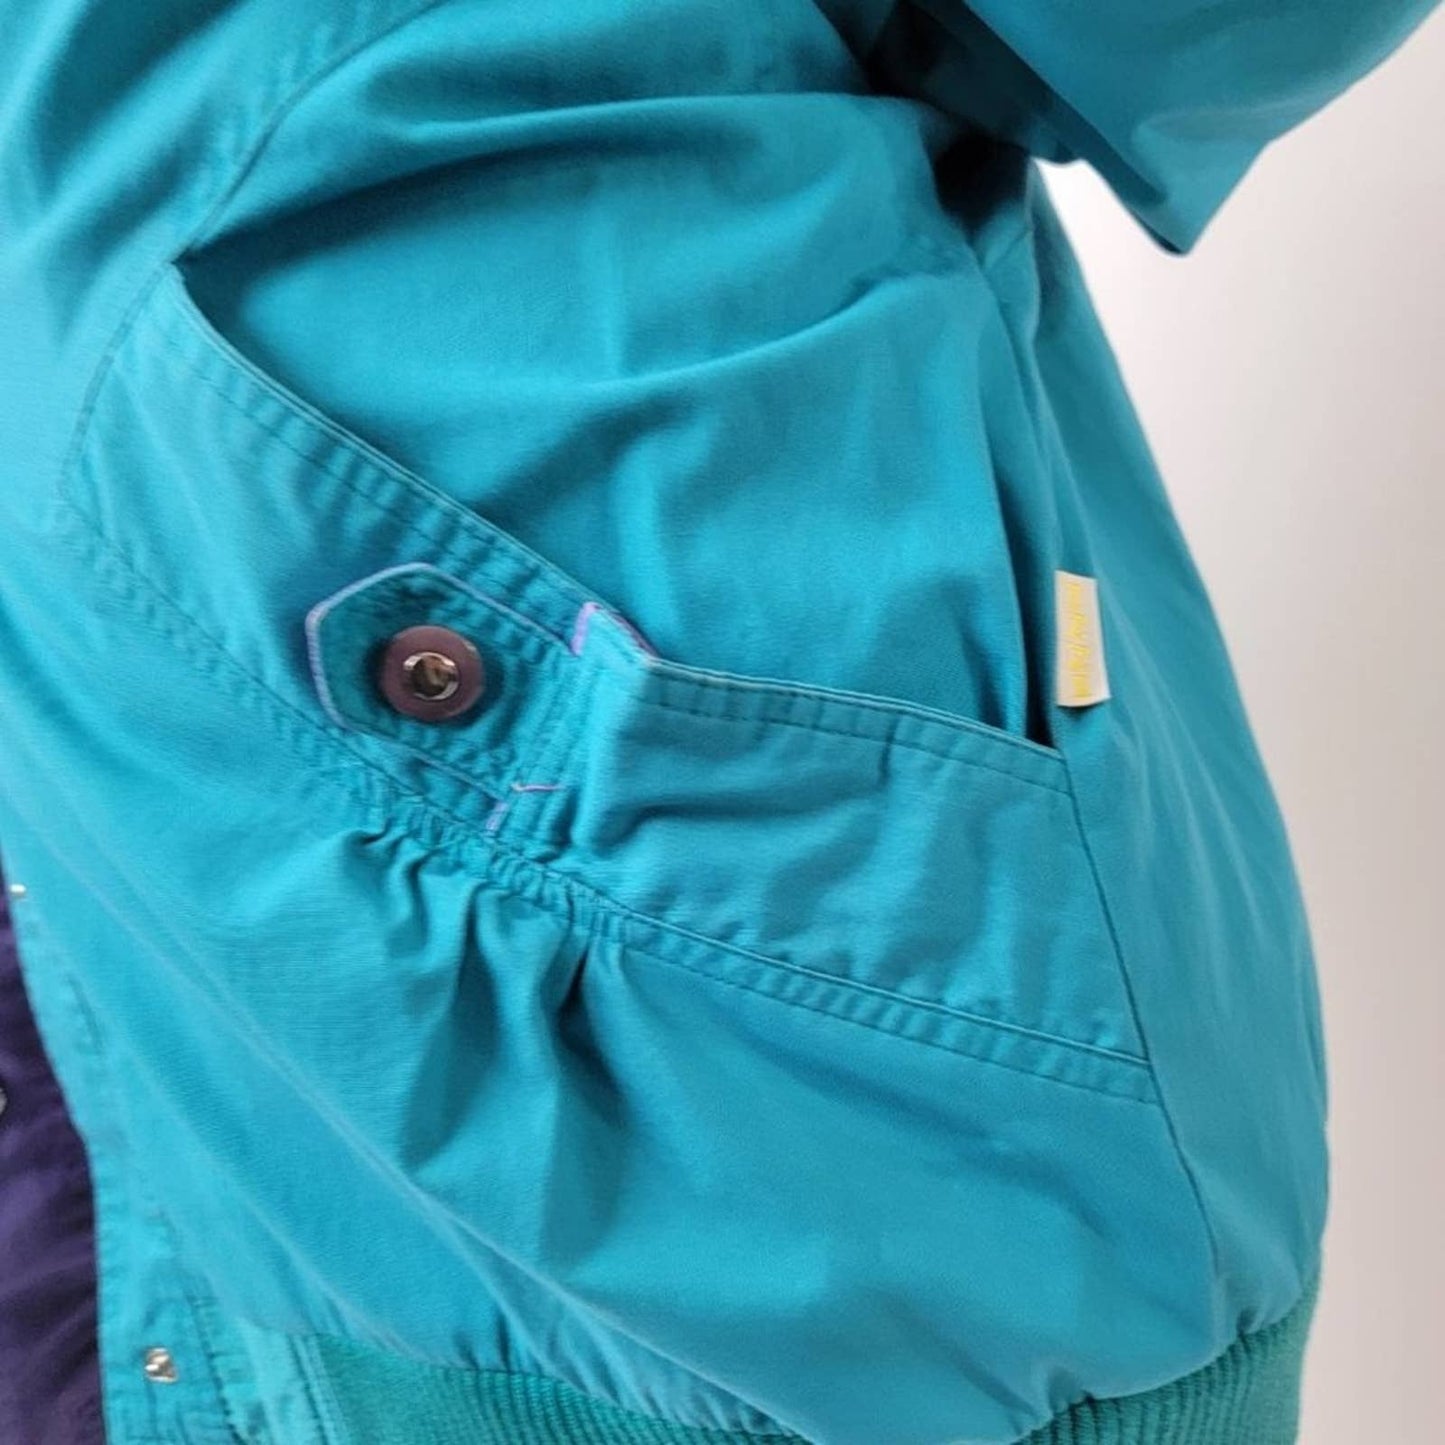 Vintage 90s IZZY Sports Wear Color-Blocked Pastel Ski / Bomber / Track Jacket